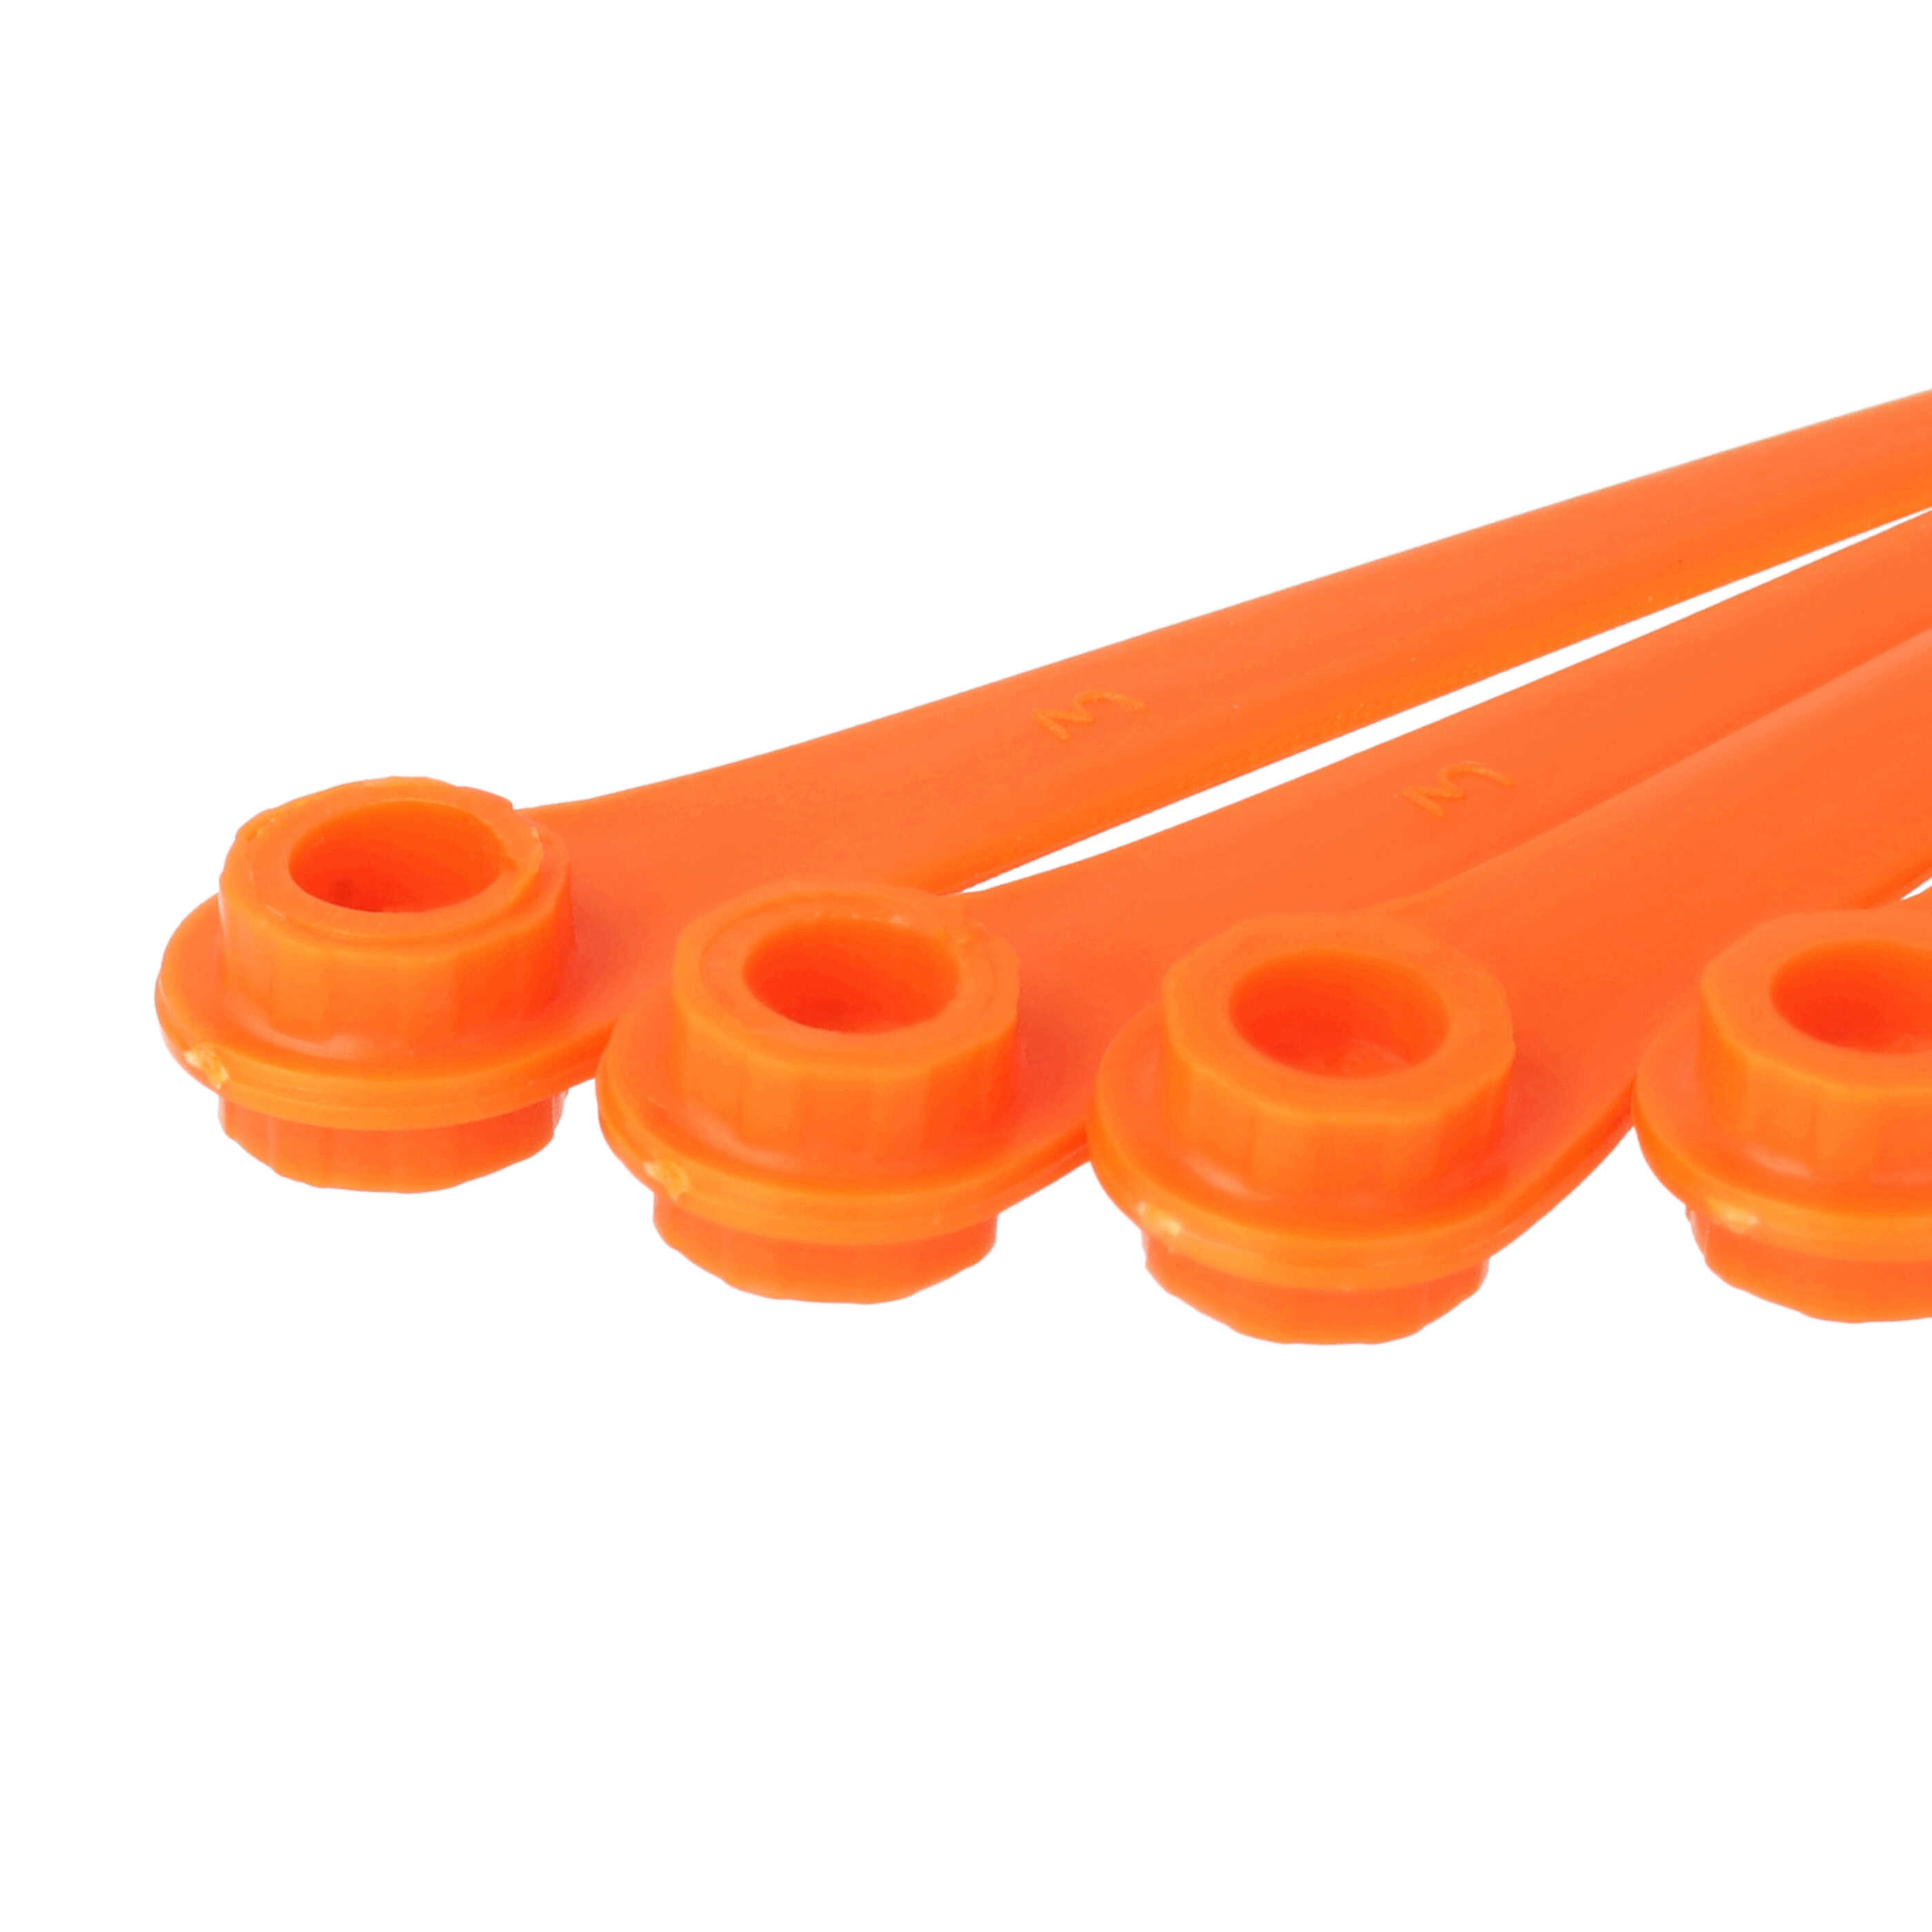 20x Lama sostituisce Gardena RotorCut 5368-20 per tagliaerba - arancione, plastica